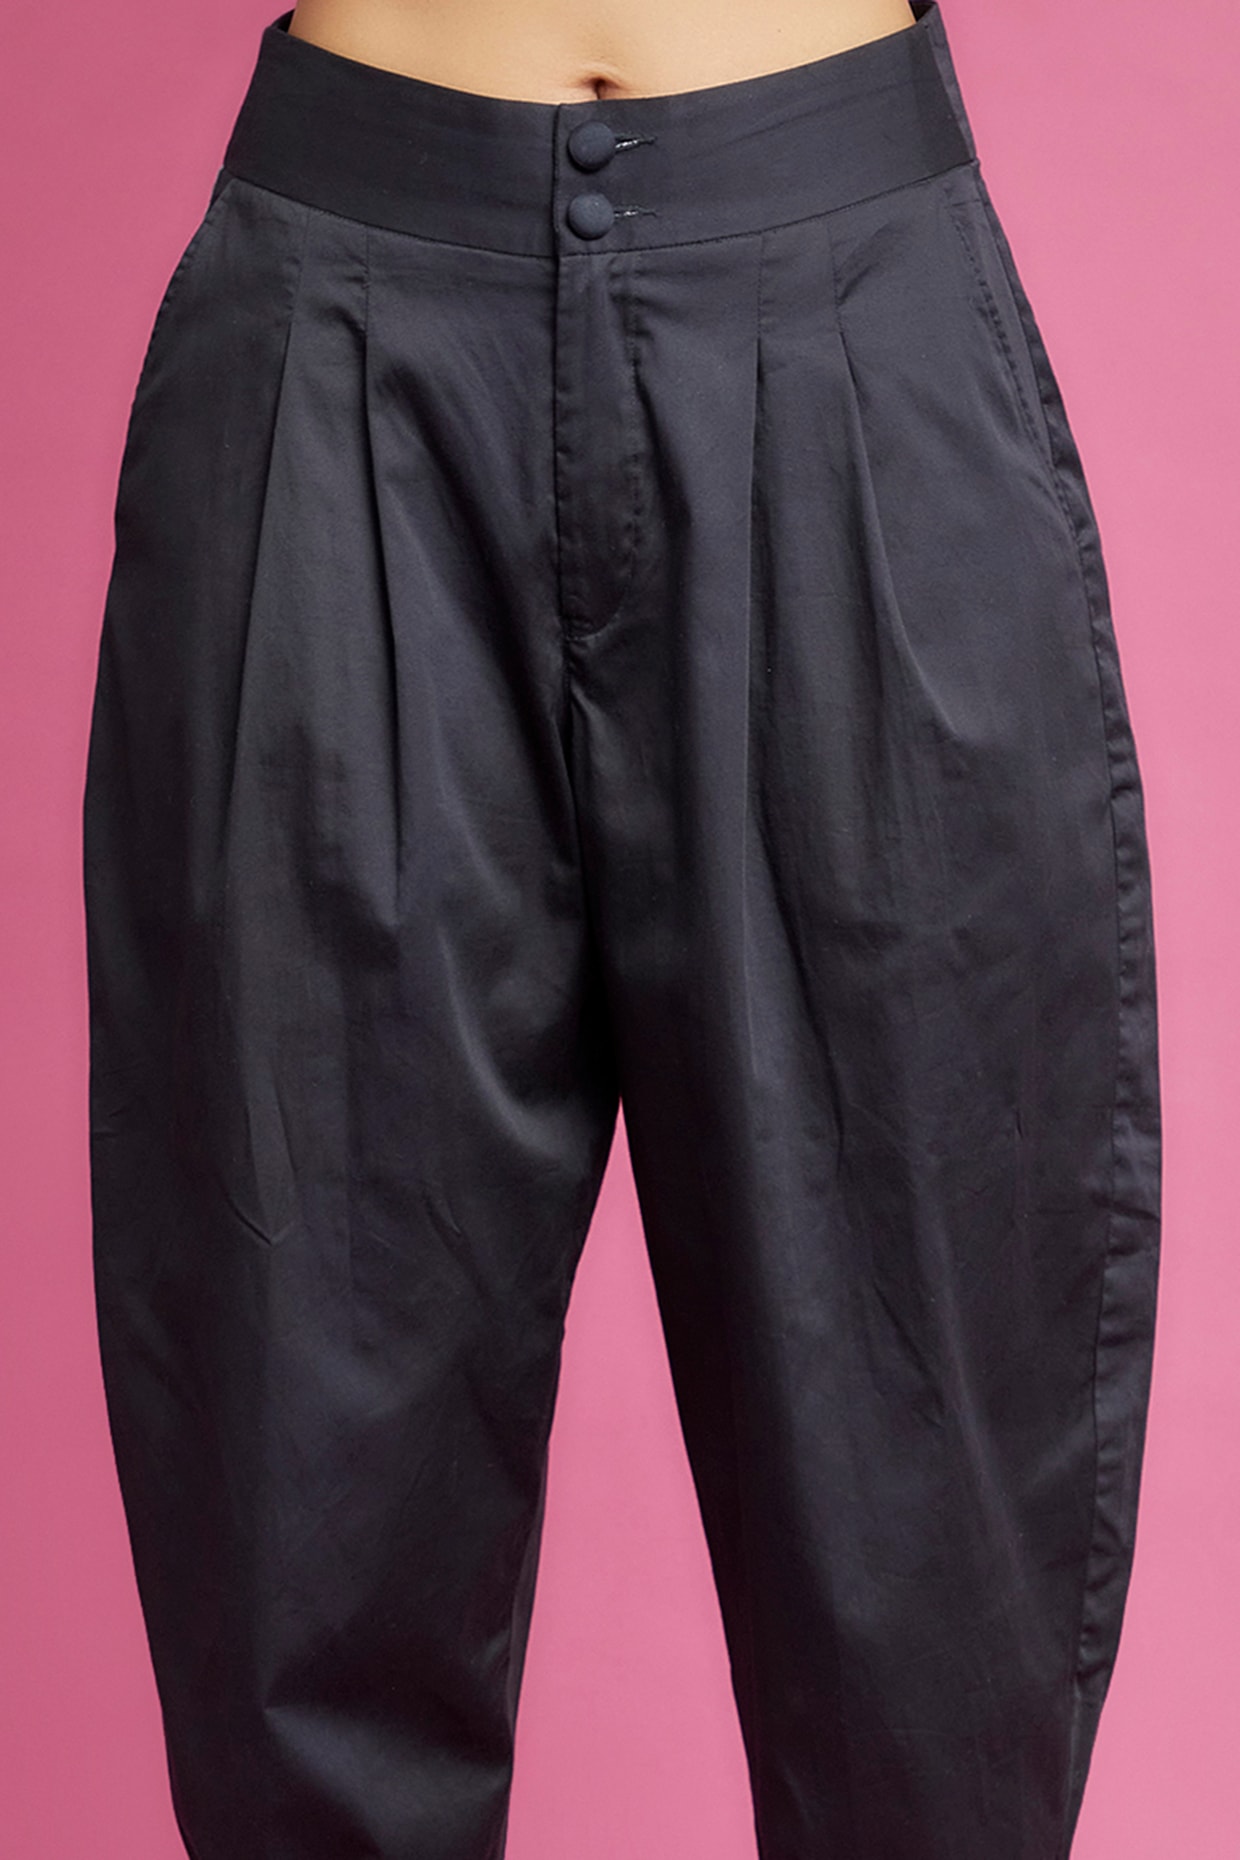 Paisley Printed Balloon Pants Black Plus Size Cotton Trousers in Black One  Size | Balloon pants, Paisley print, Black pants